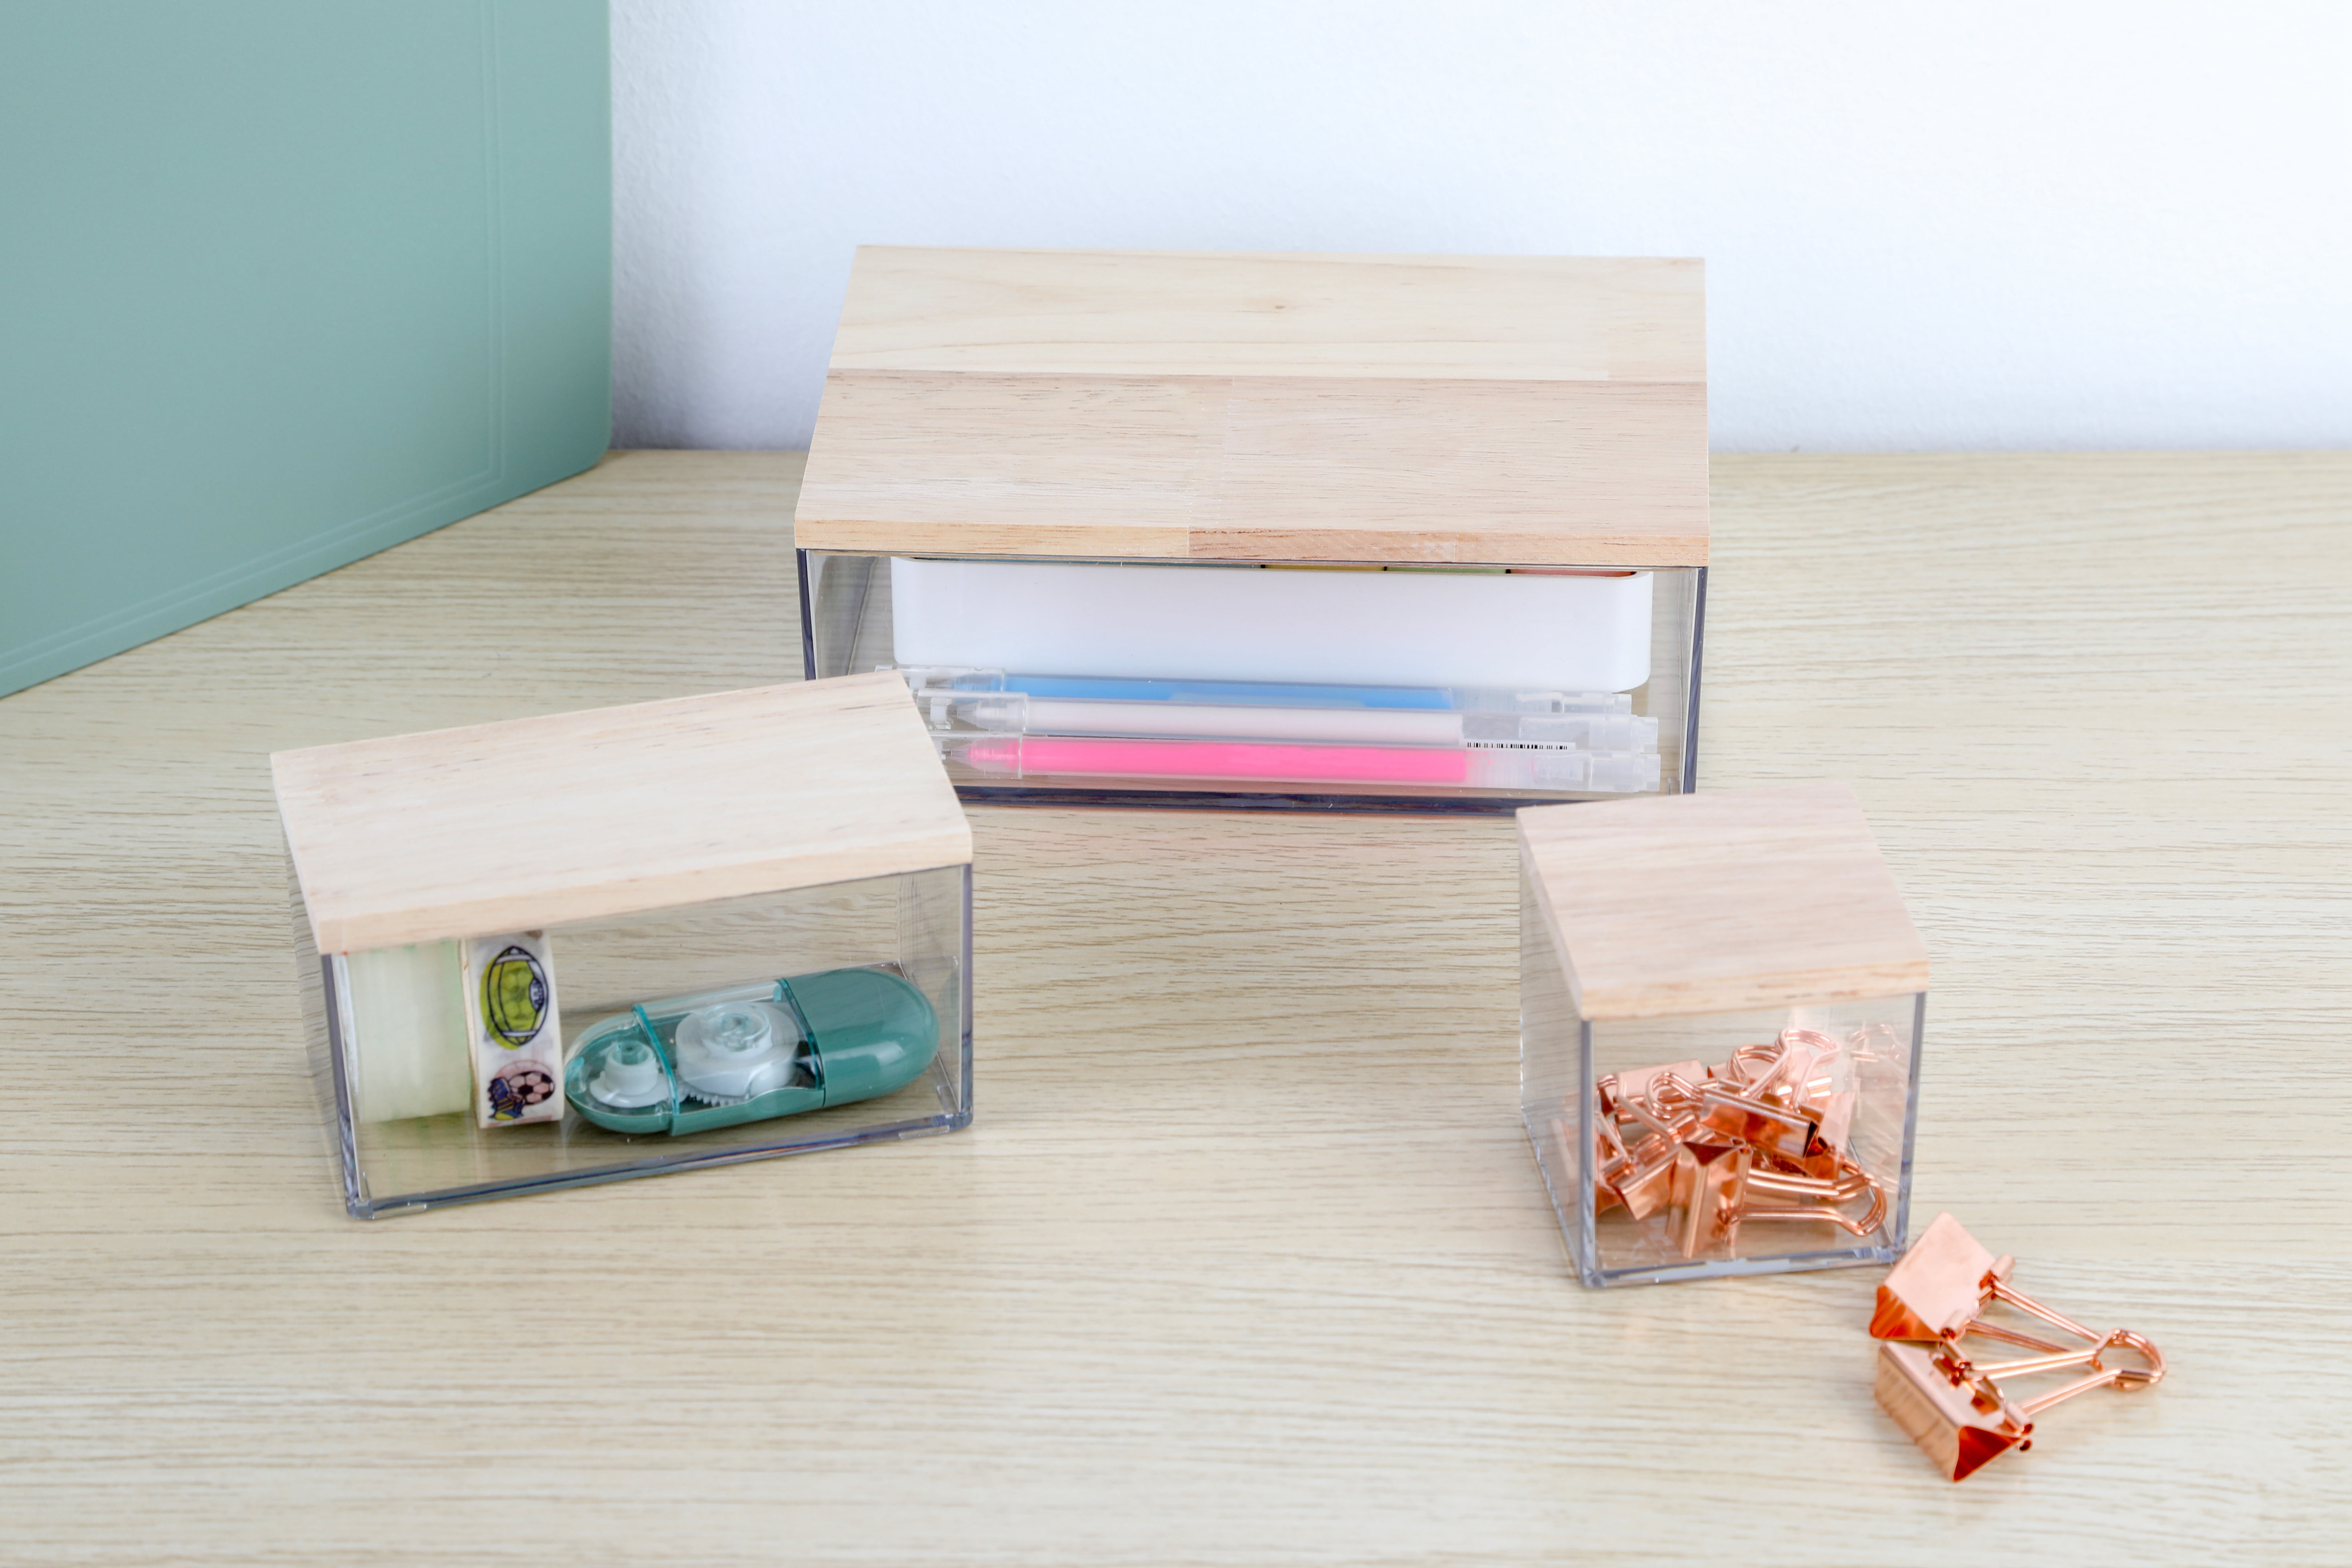 Pen+gear Organizational Storage Box with Woodgrain Pattern Lid, Silver Gray